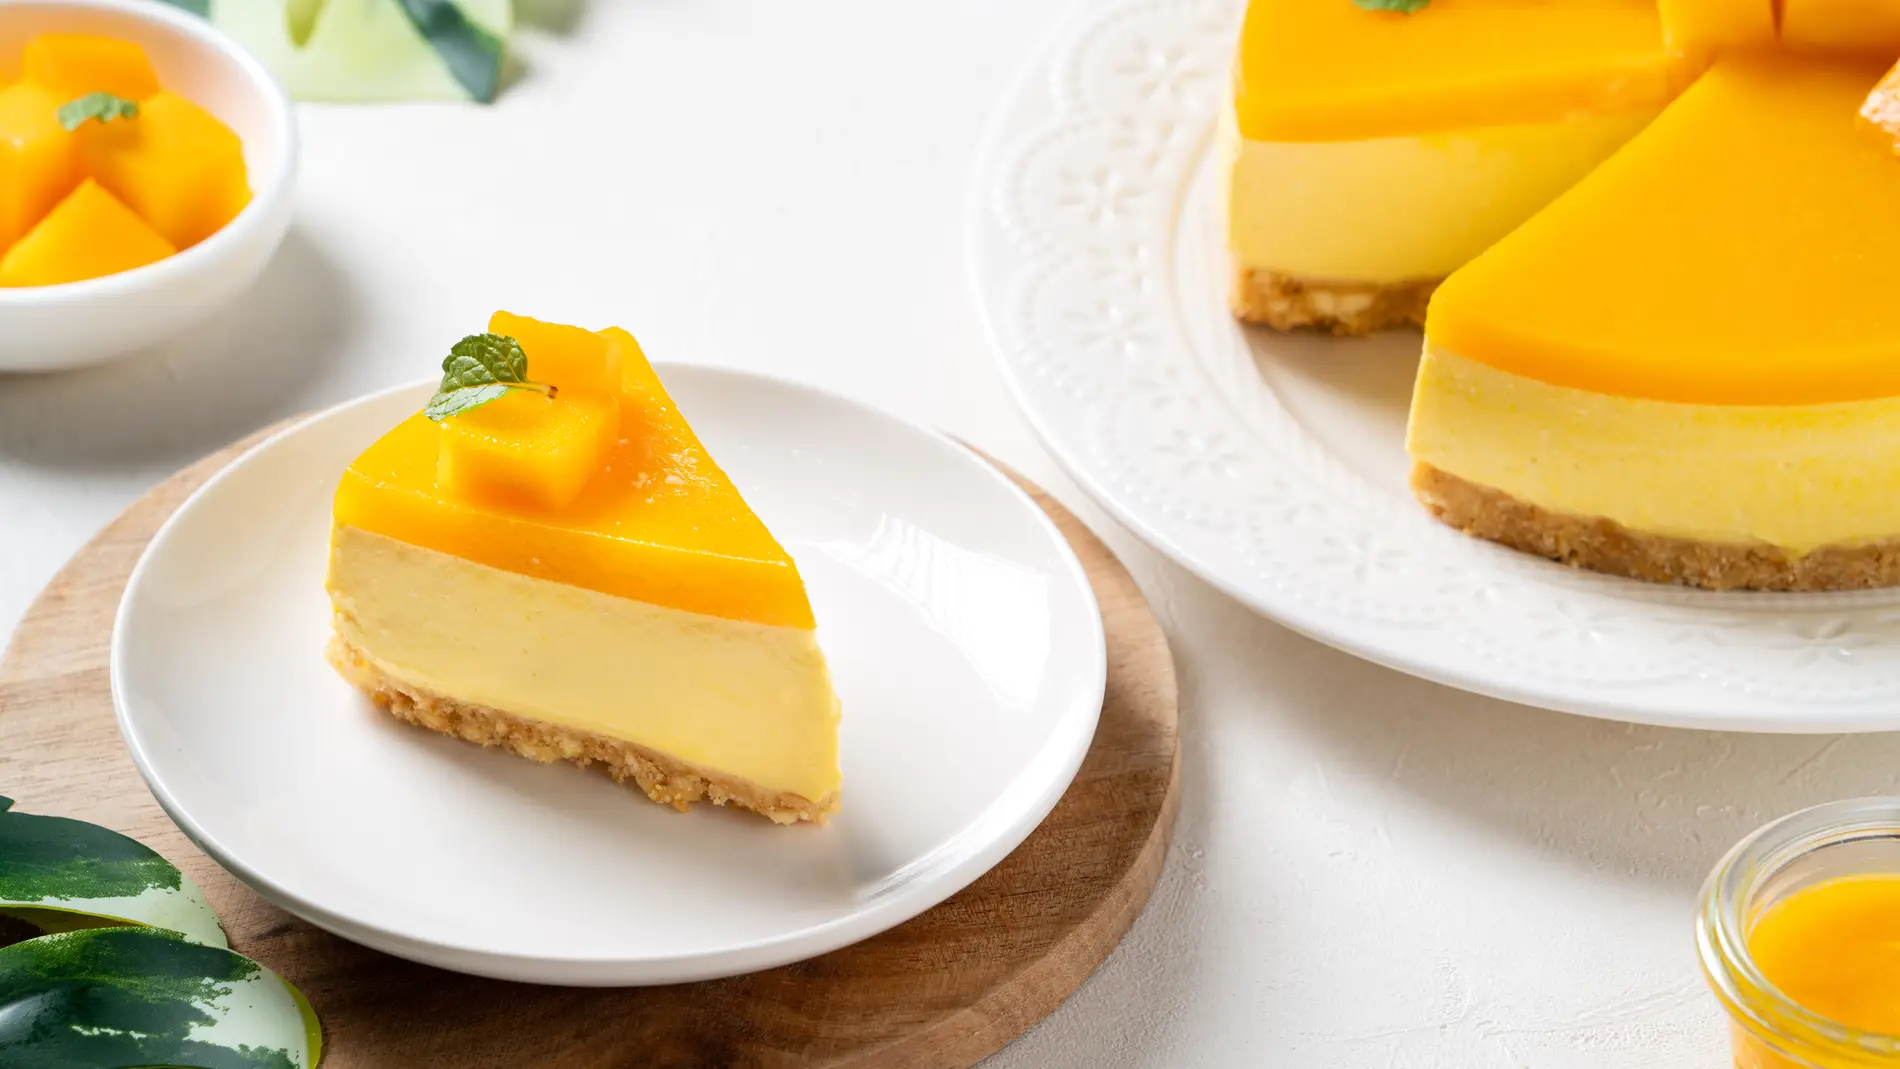 Cheesecake de mango sin horno: un dulce fresco y delicioso